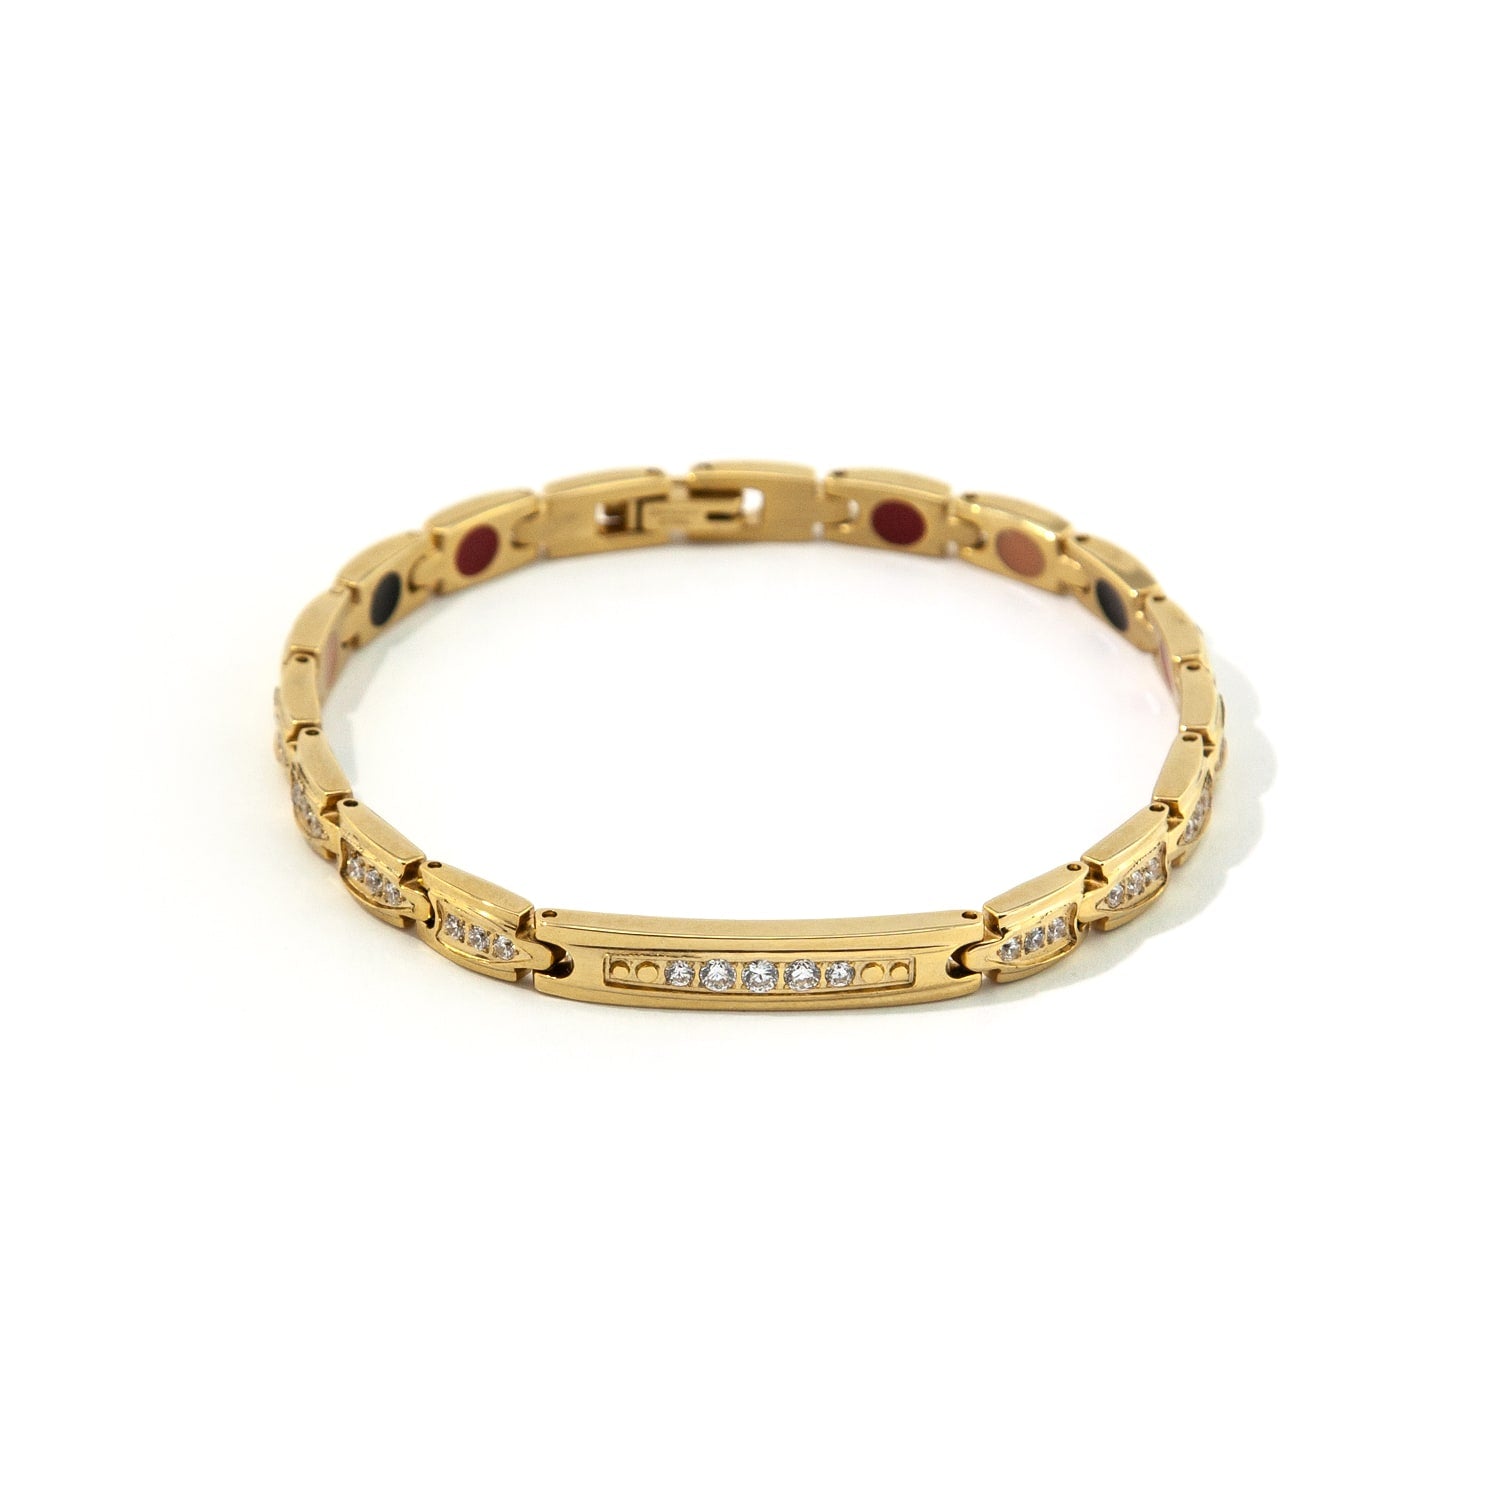 Adored - Negative Ion Bracelet, Gold with Swarovski Crystals